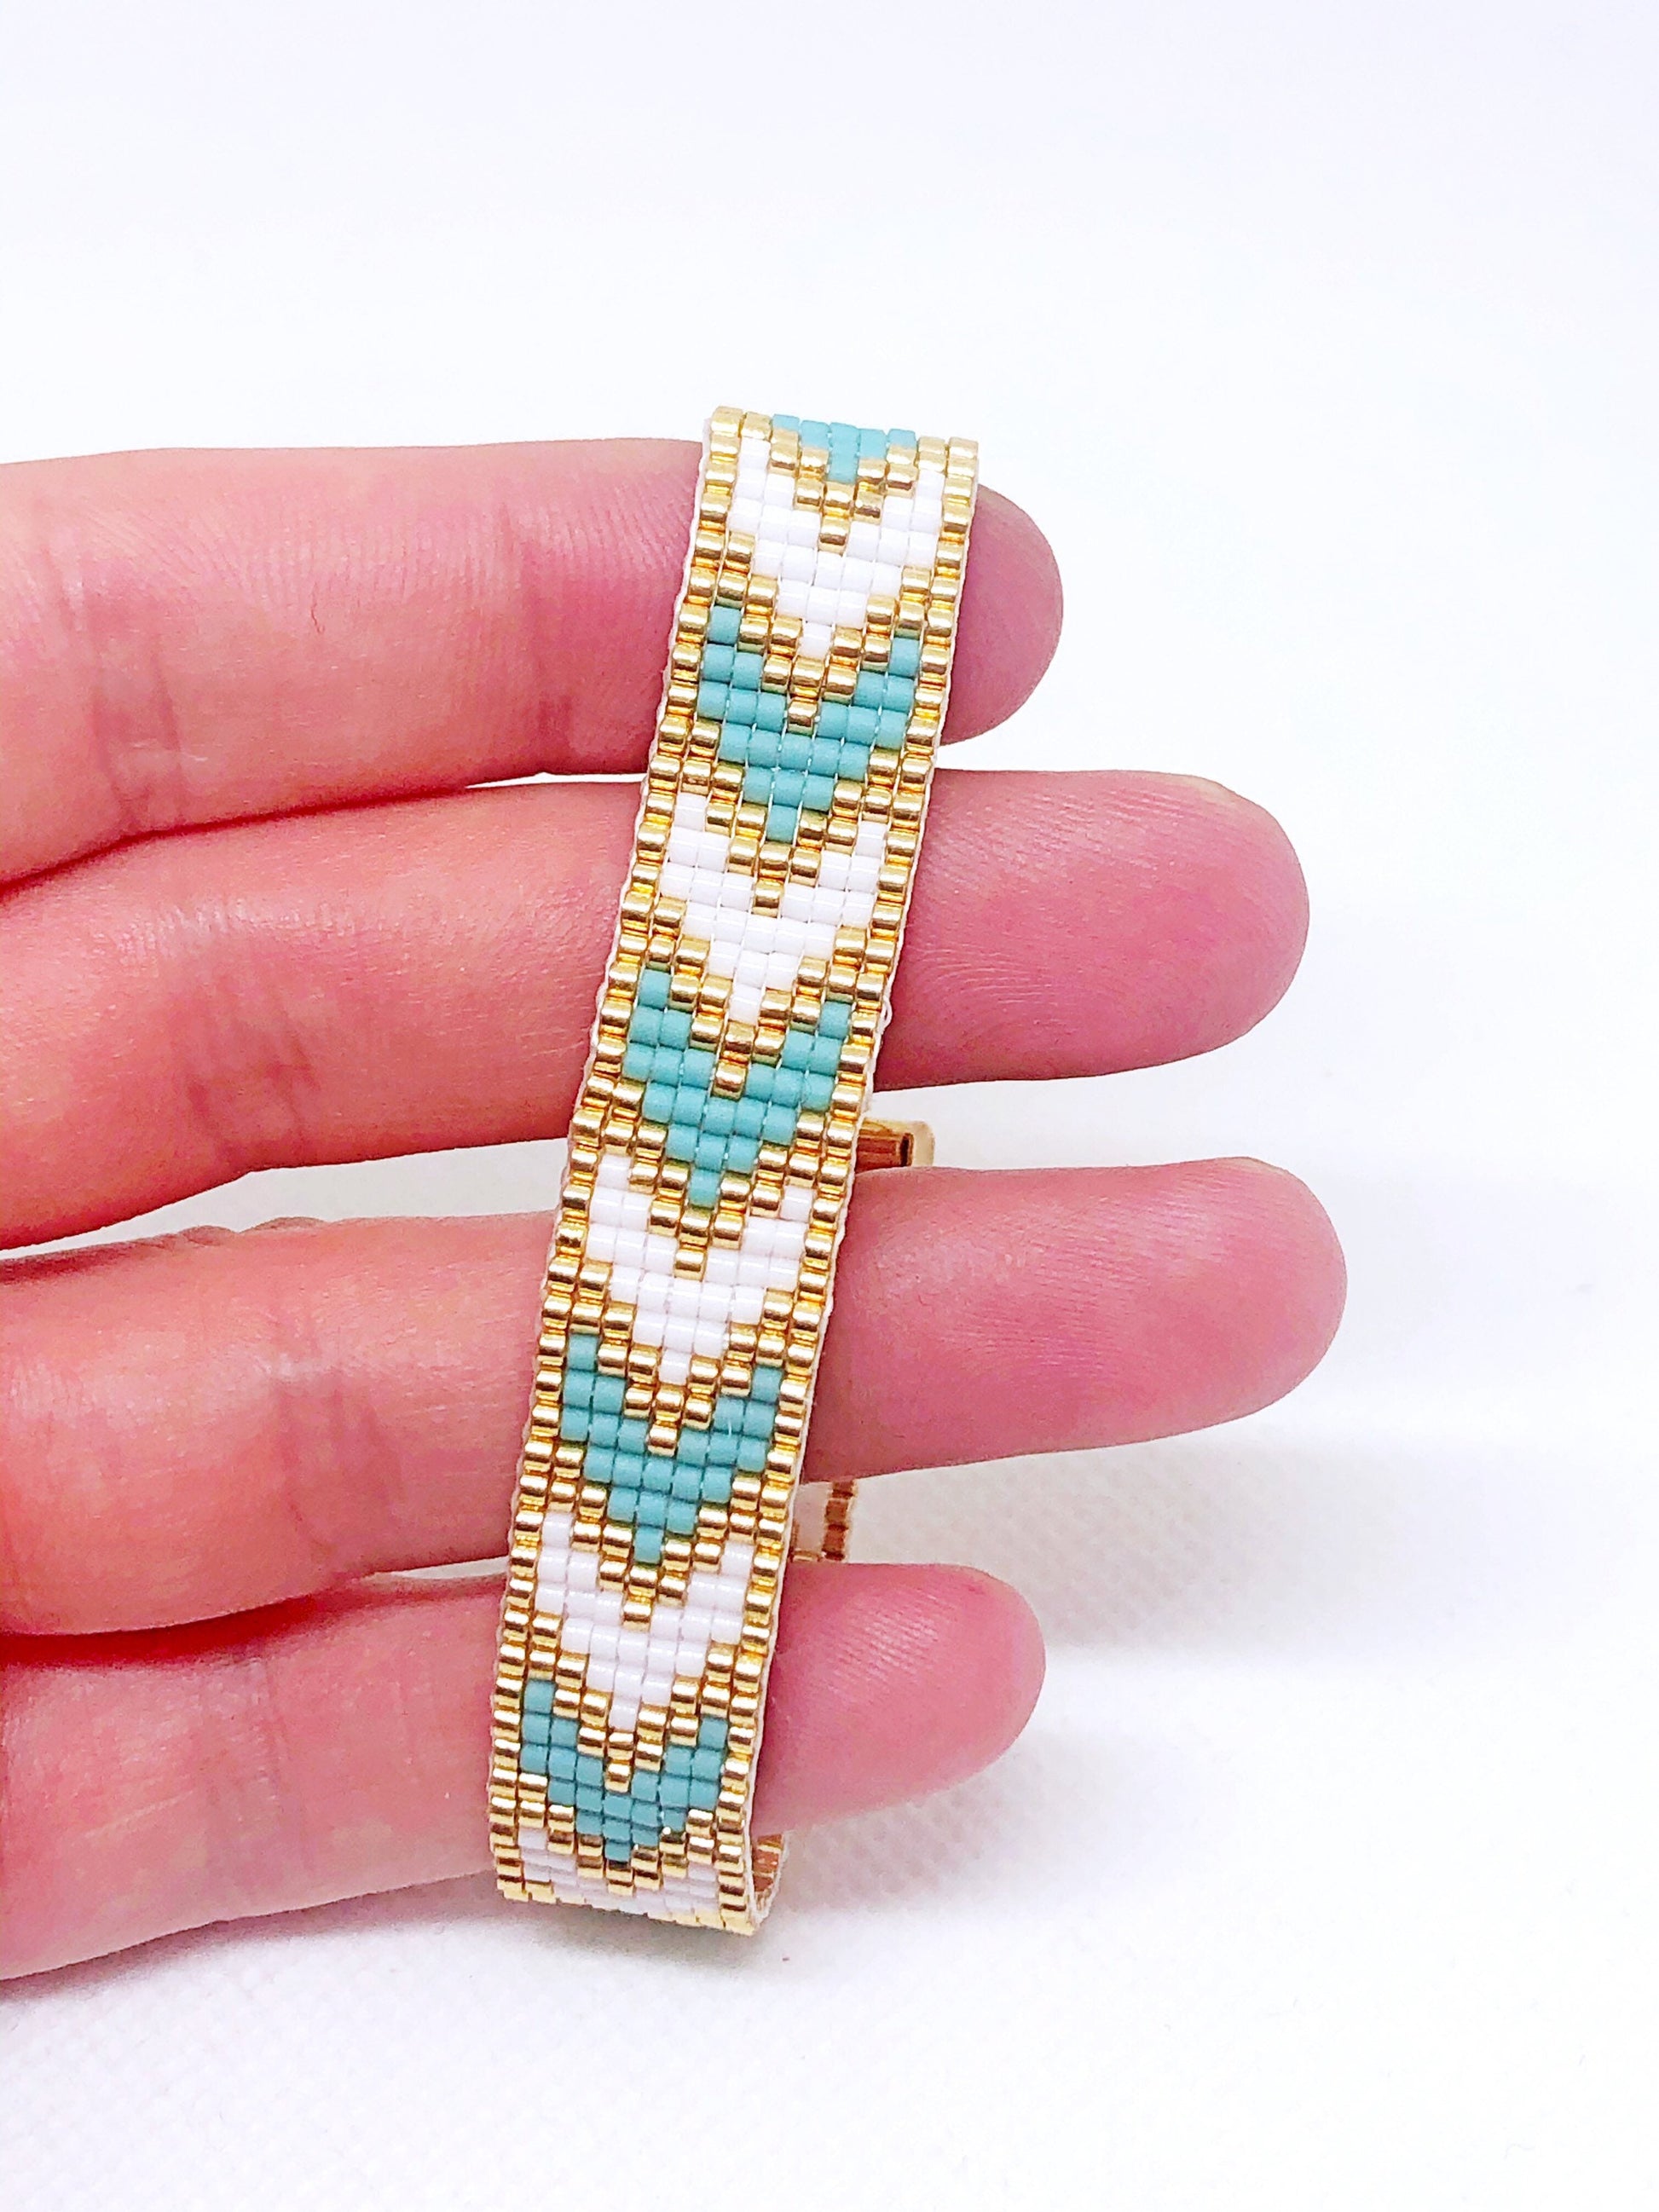 Isabella Bead Loom Bracelet Pattern - Megan's Beaded Designs